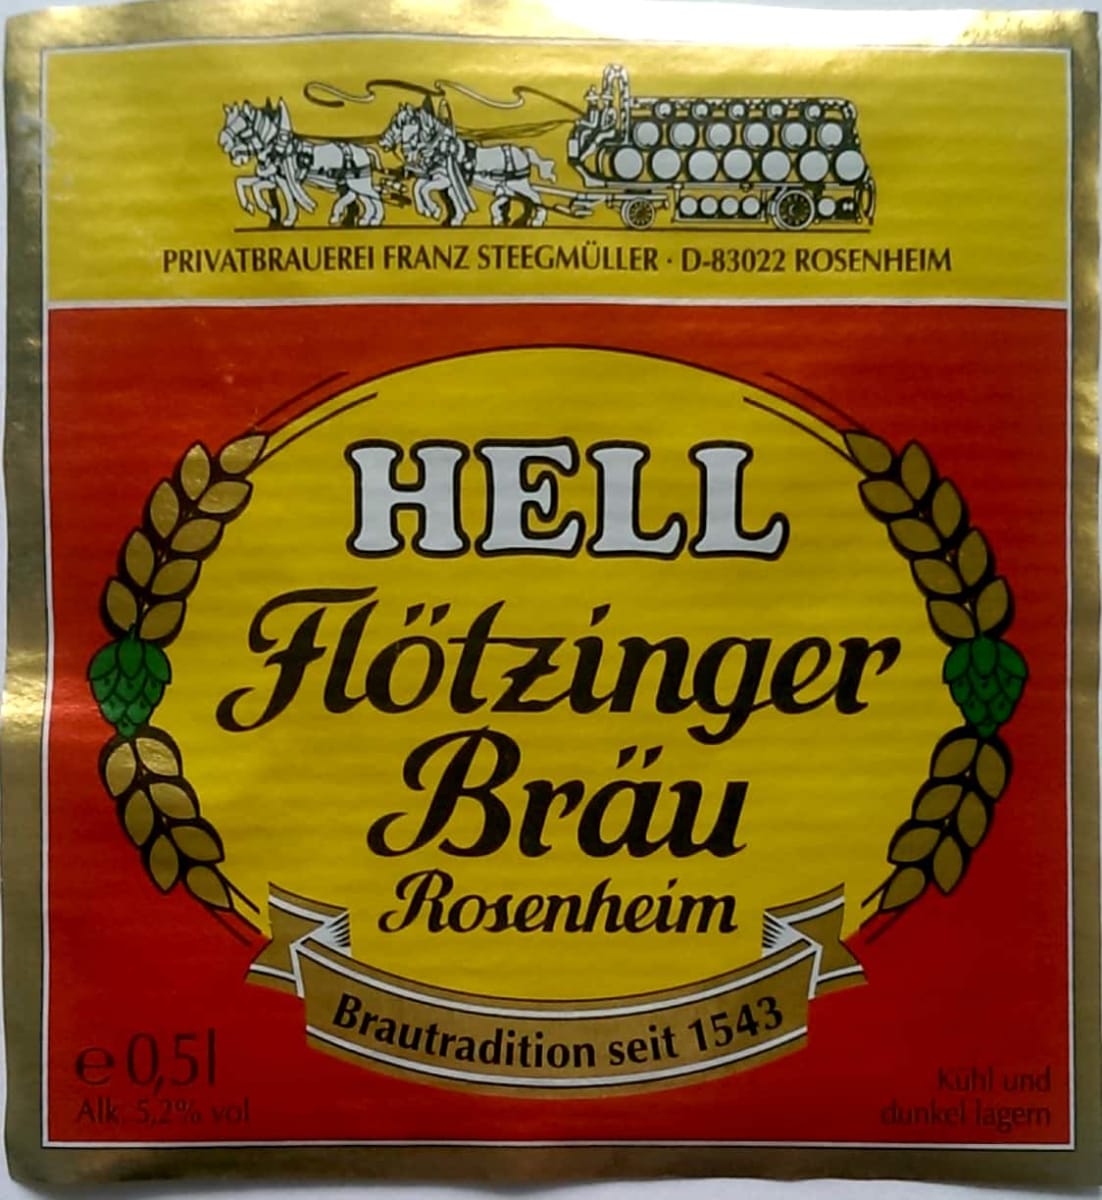 Flotzinger Brau Hell